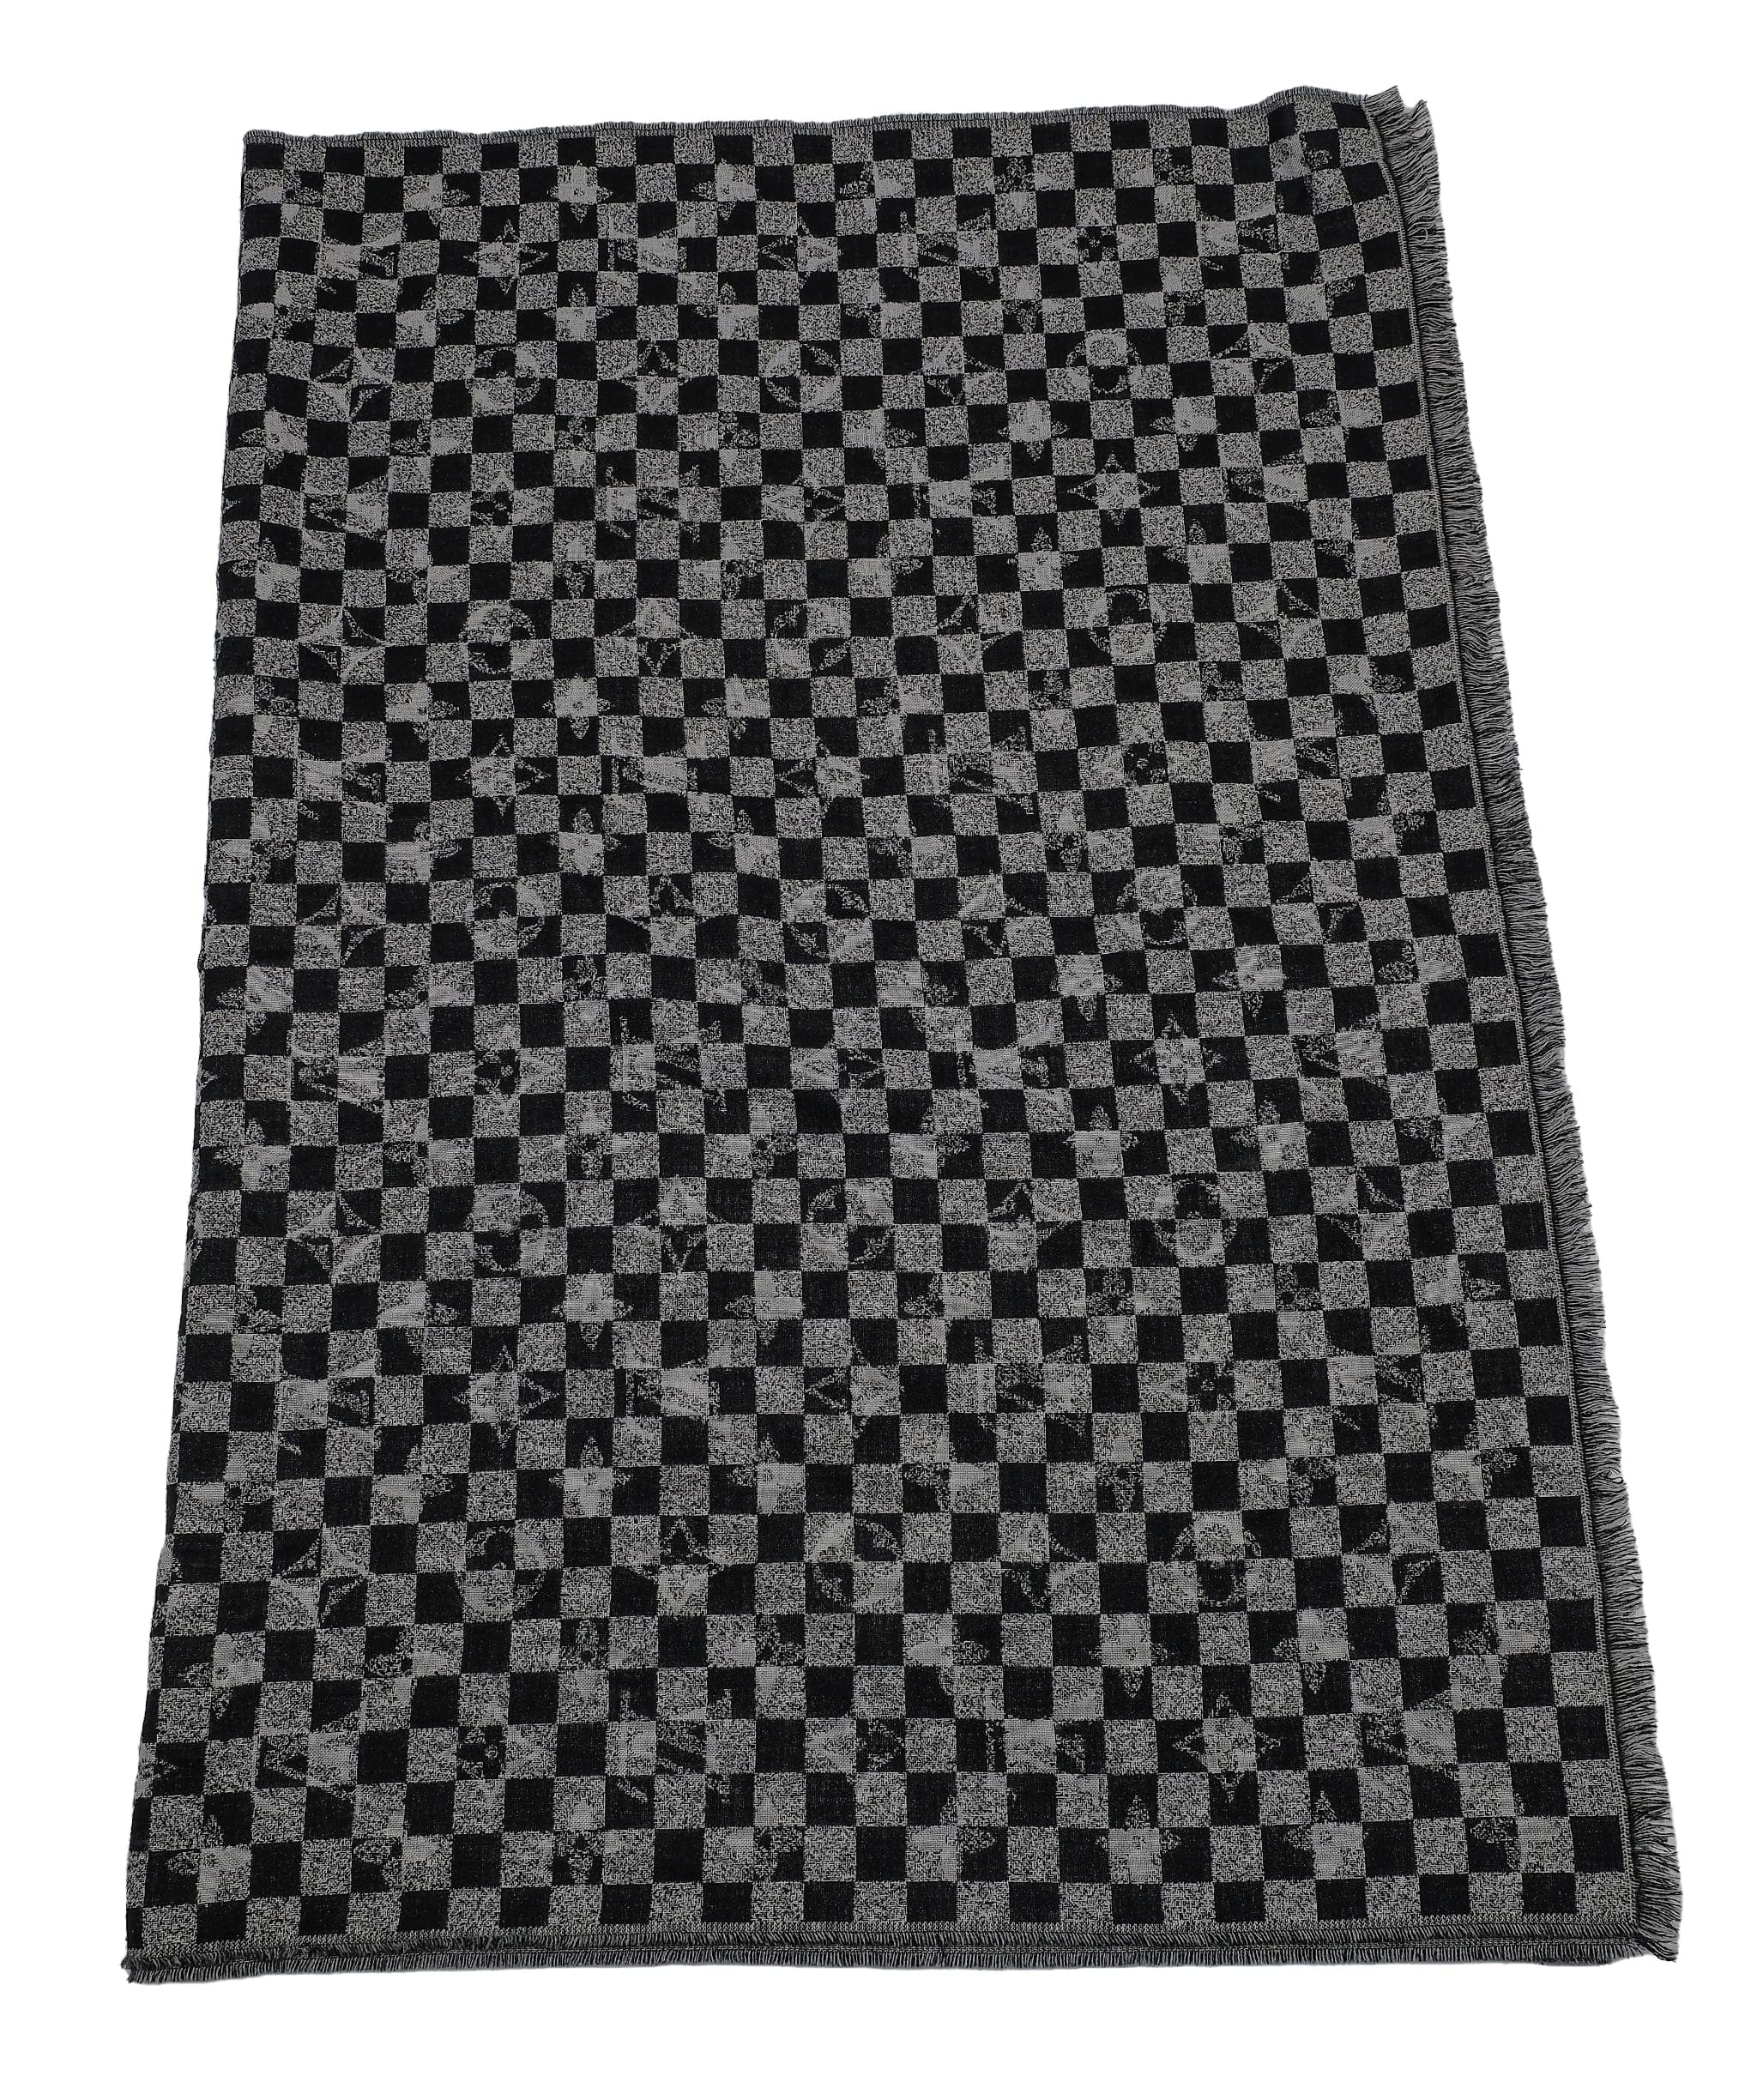 Louis Vuitton Louis vuitton Scarf black white and grey RJC3165